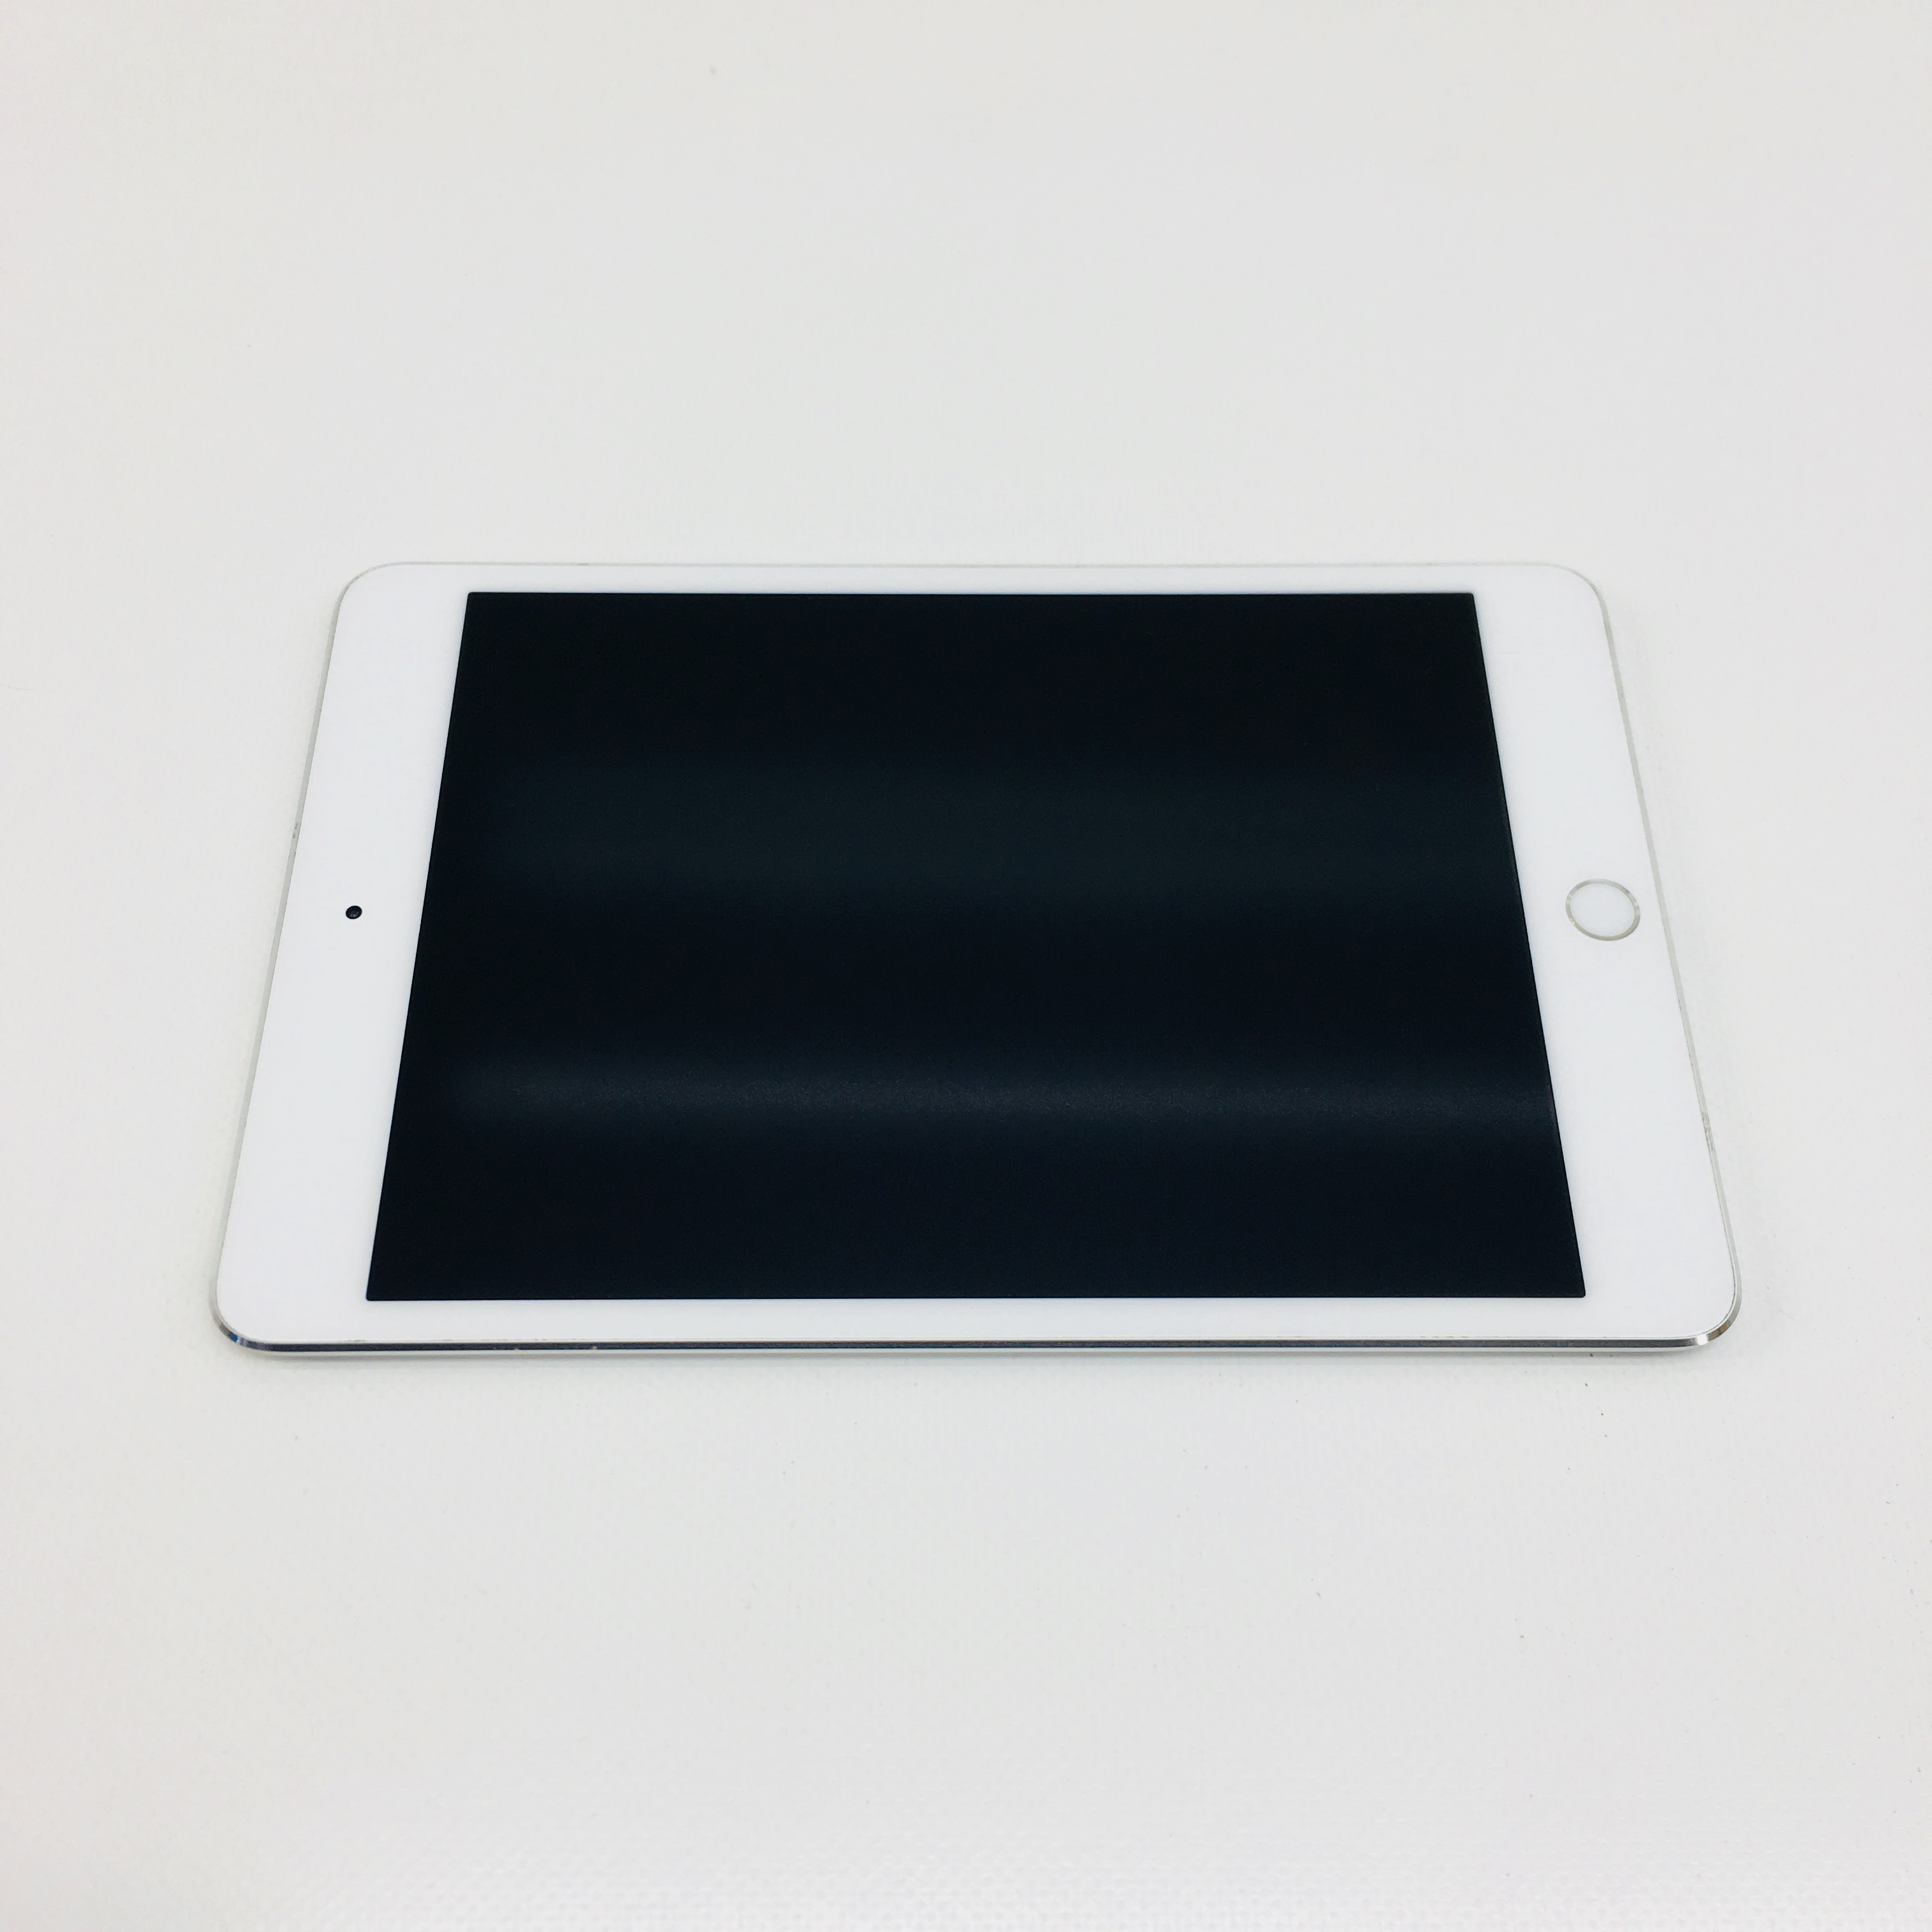 Fully Refurbished iPad mini 4 Wi-Fi 16GB / SILVER - mResell.com.au